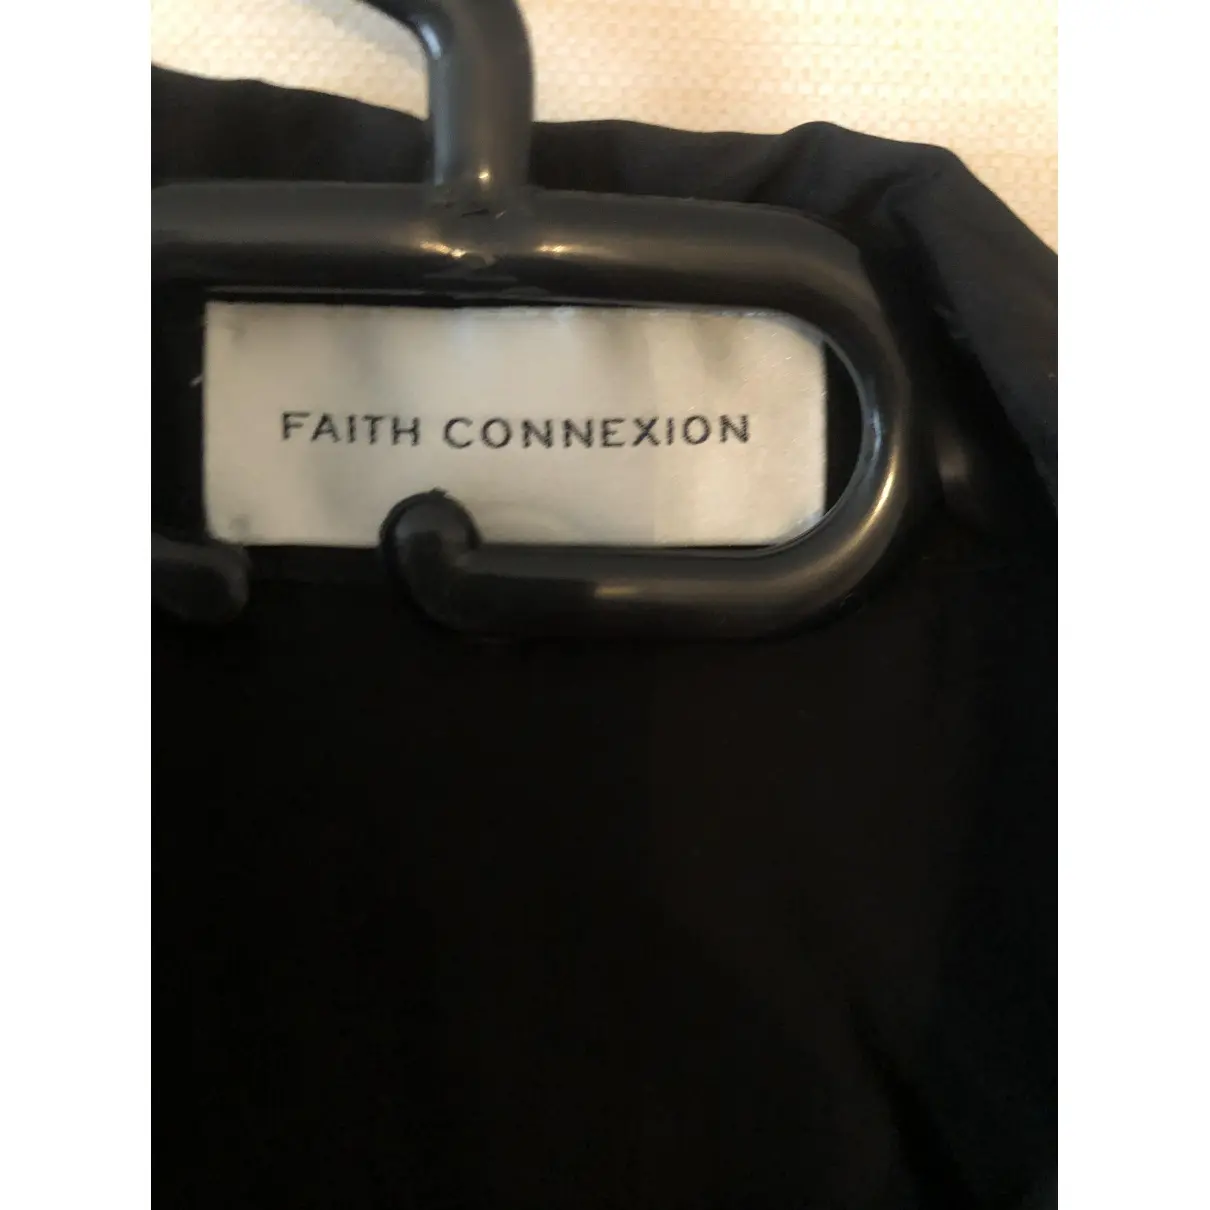 Buy Faith Connexion Silk blouse online